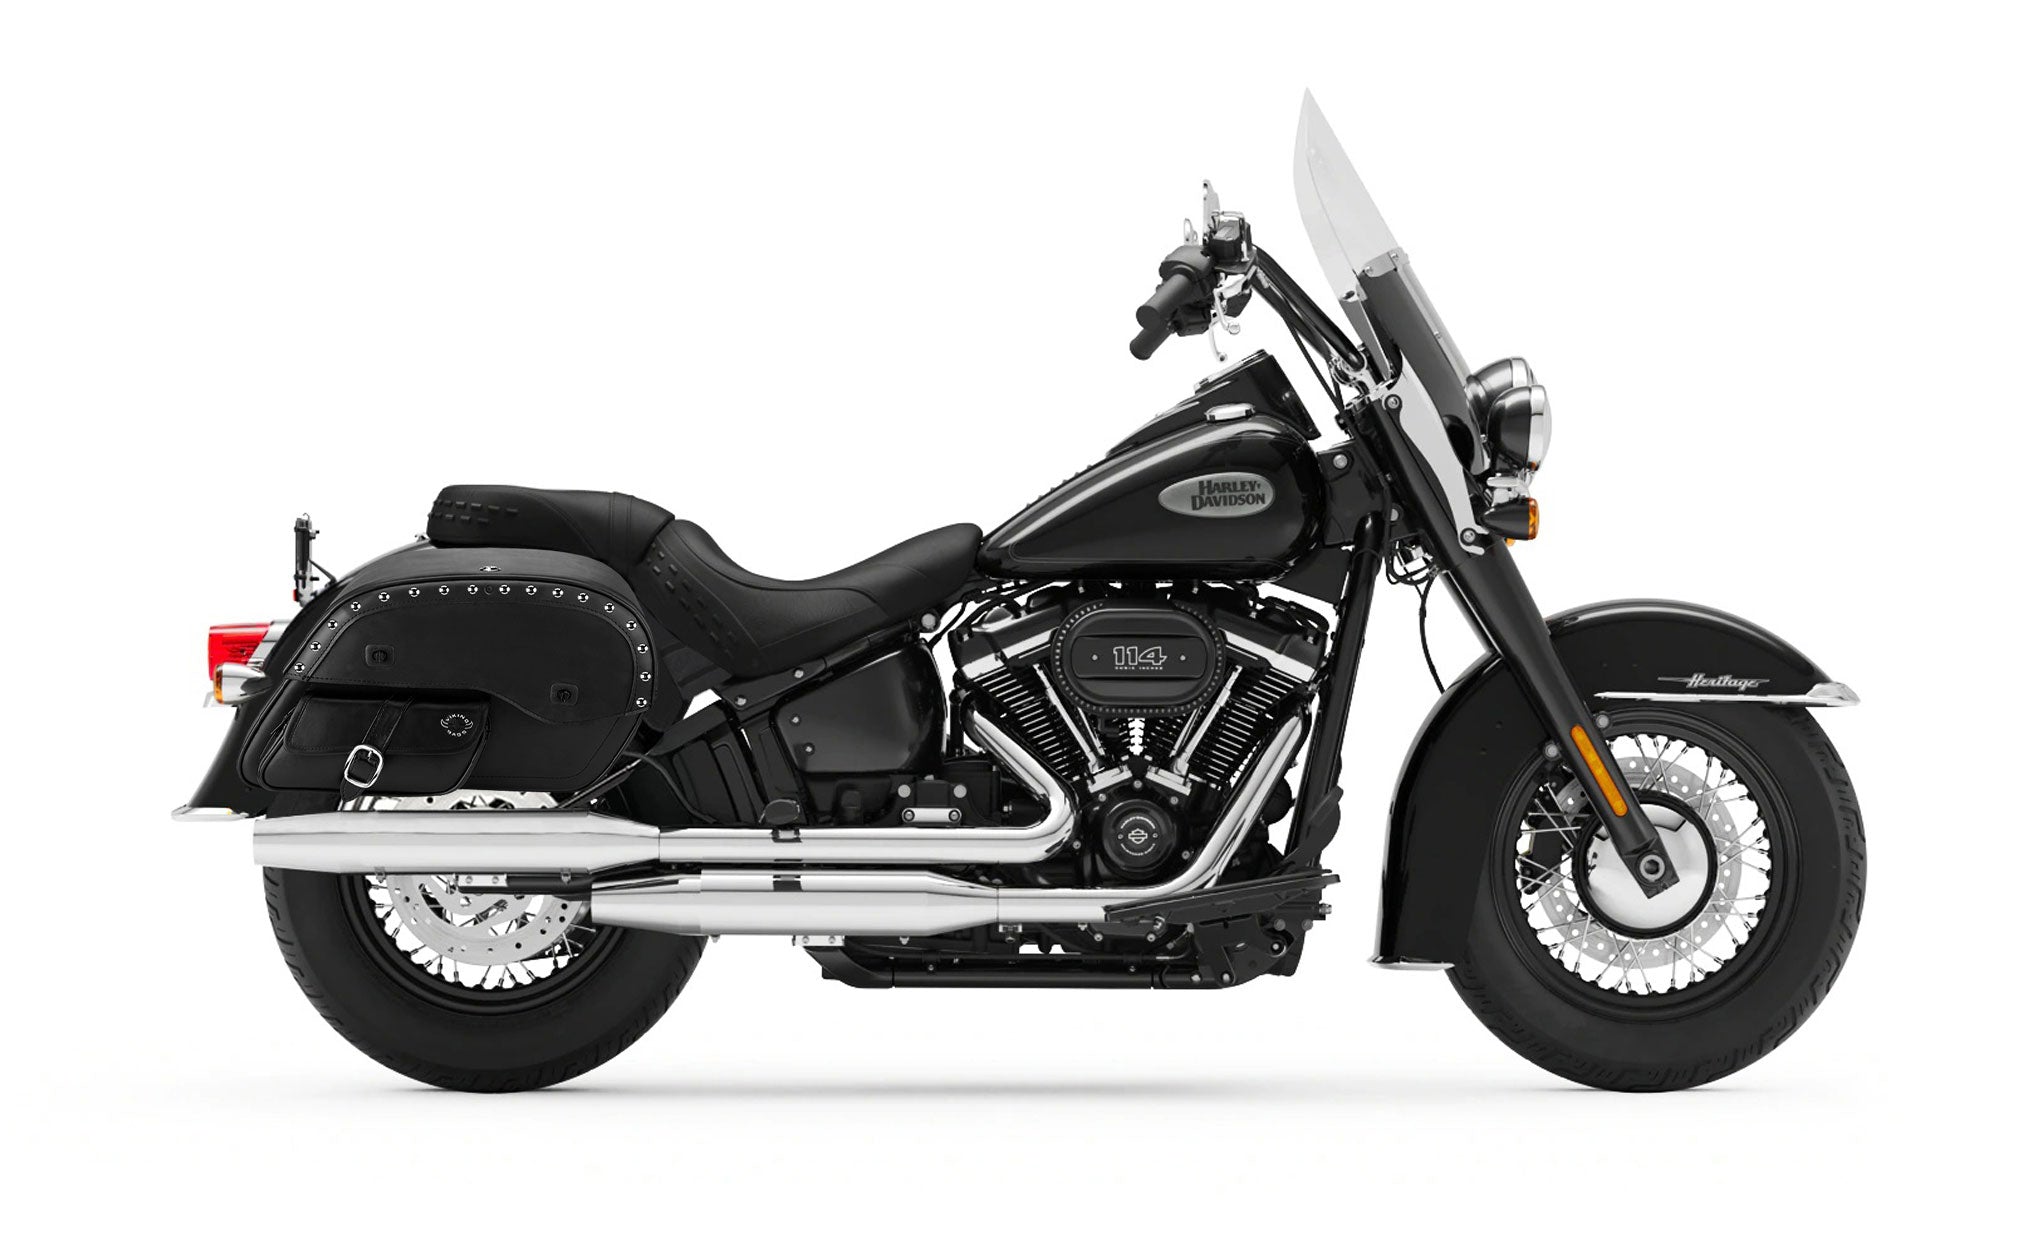 Viking Side Pocket Large Studded Leather Motorcycle Saddlebags for Harley Softail Heritage FLST/I/C/CI Bag on Bike View @expand